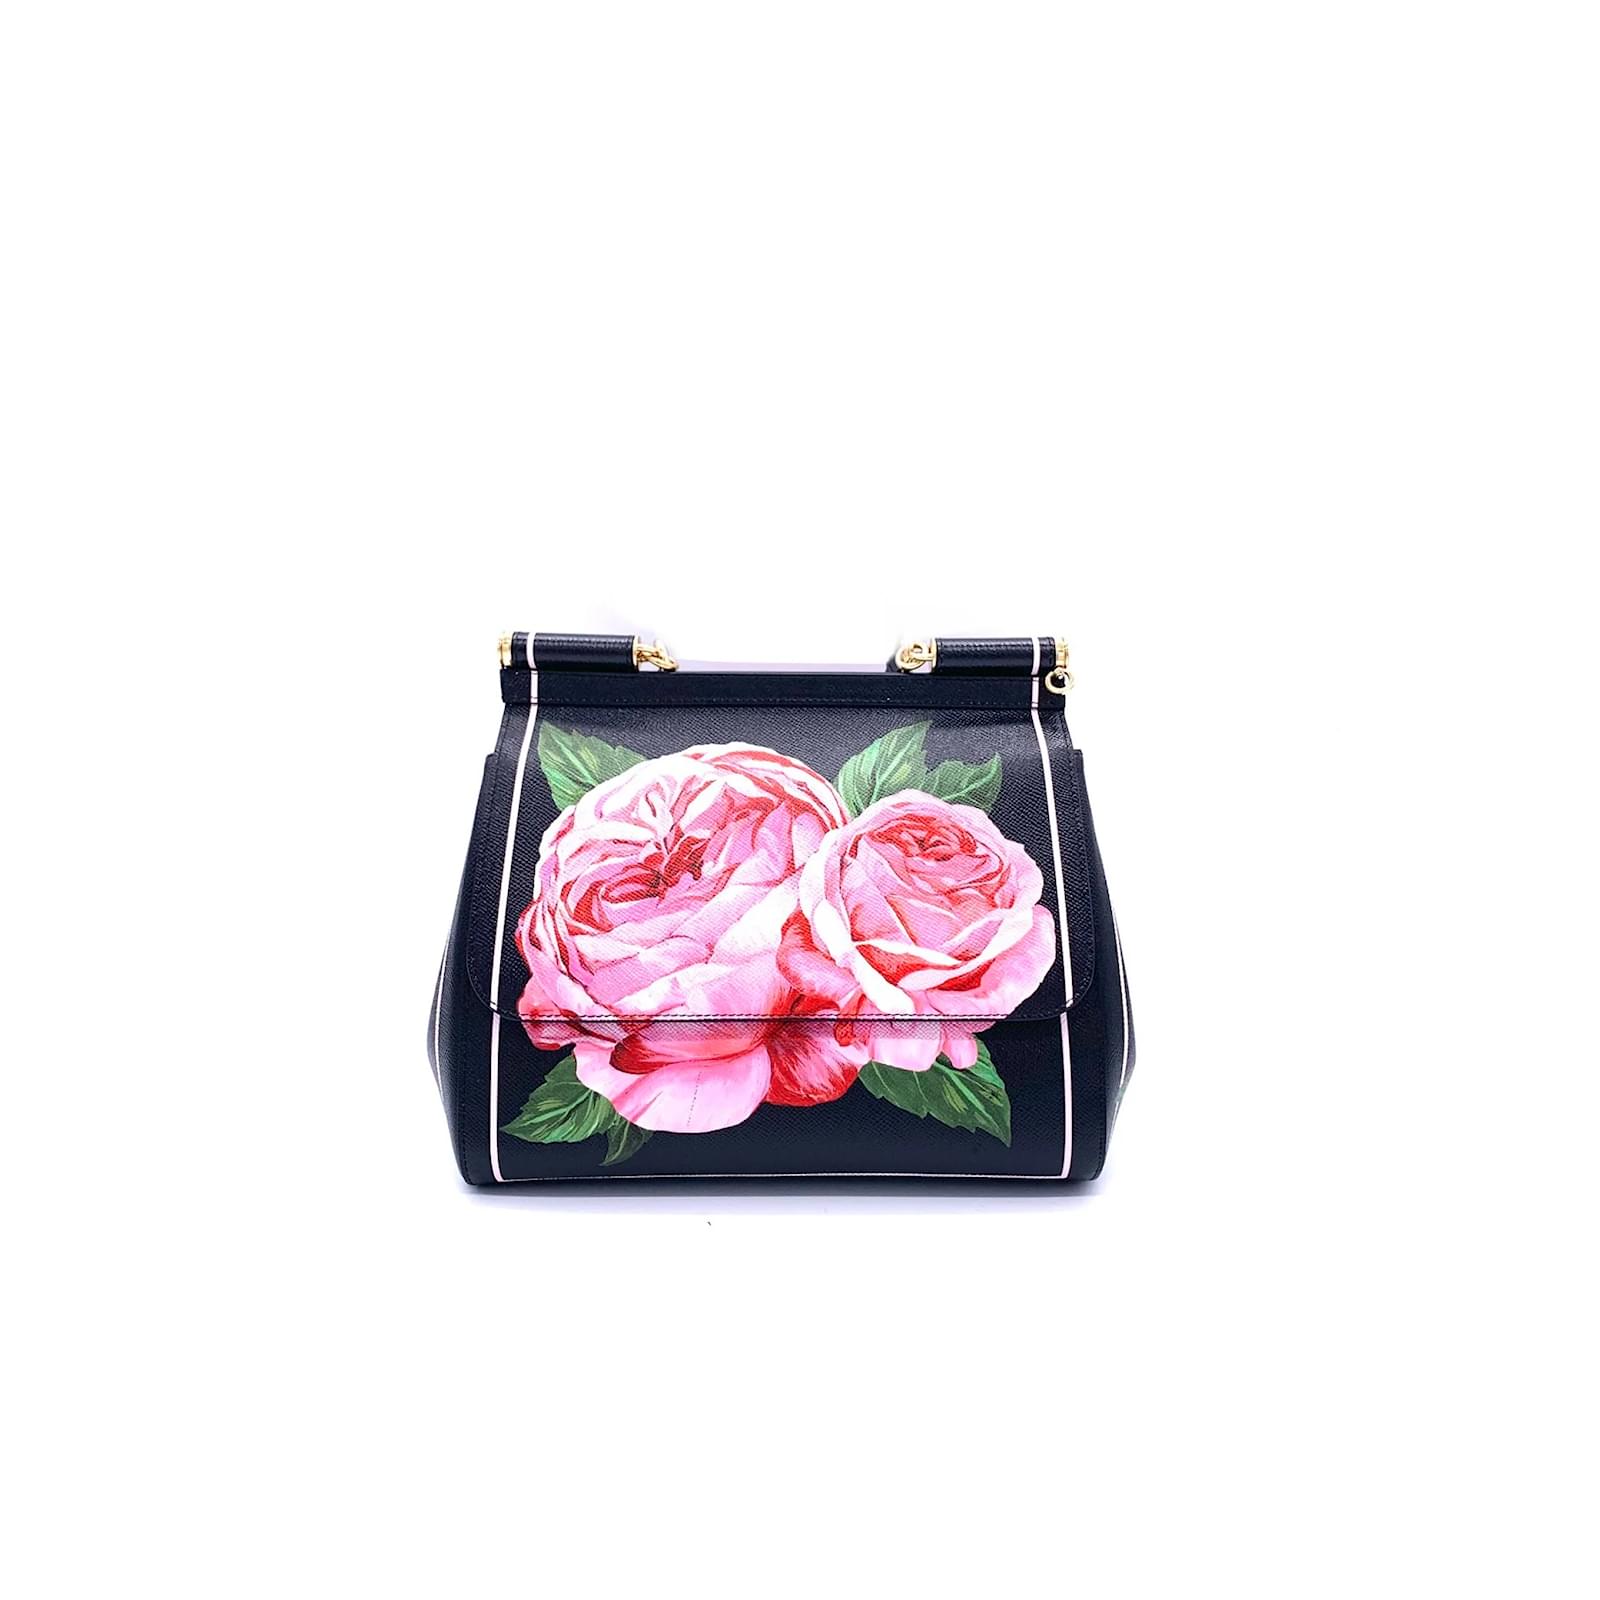 Shop Dolce & Gabbana small Sicily rose print bag.